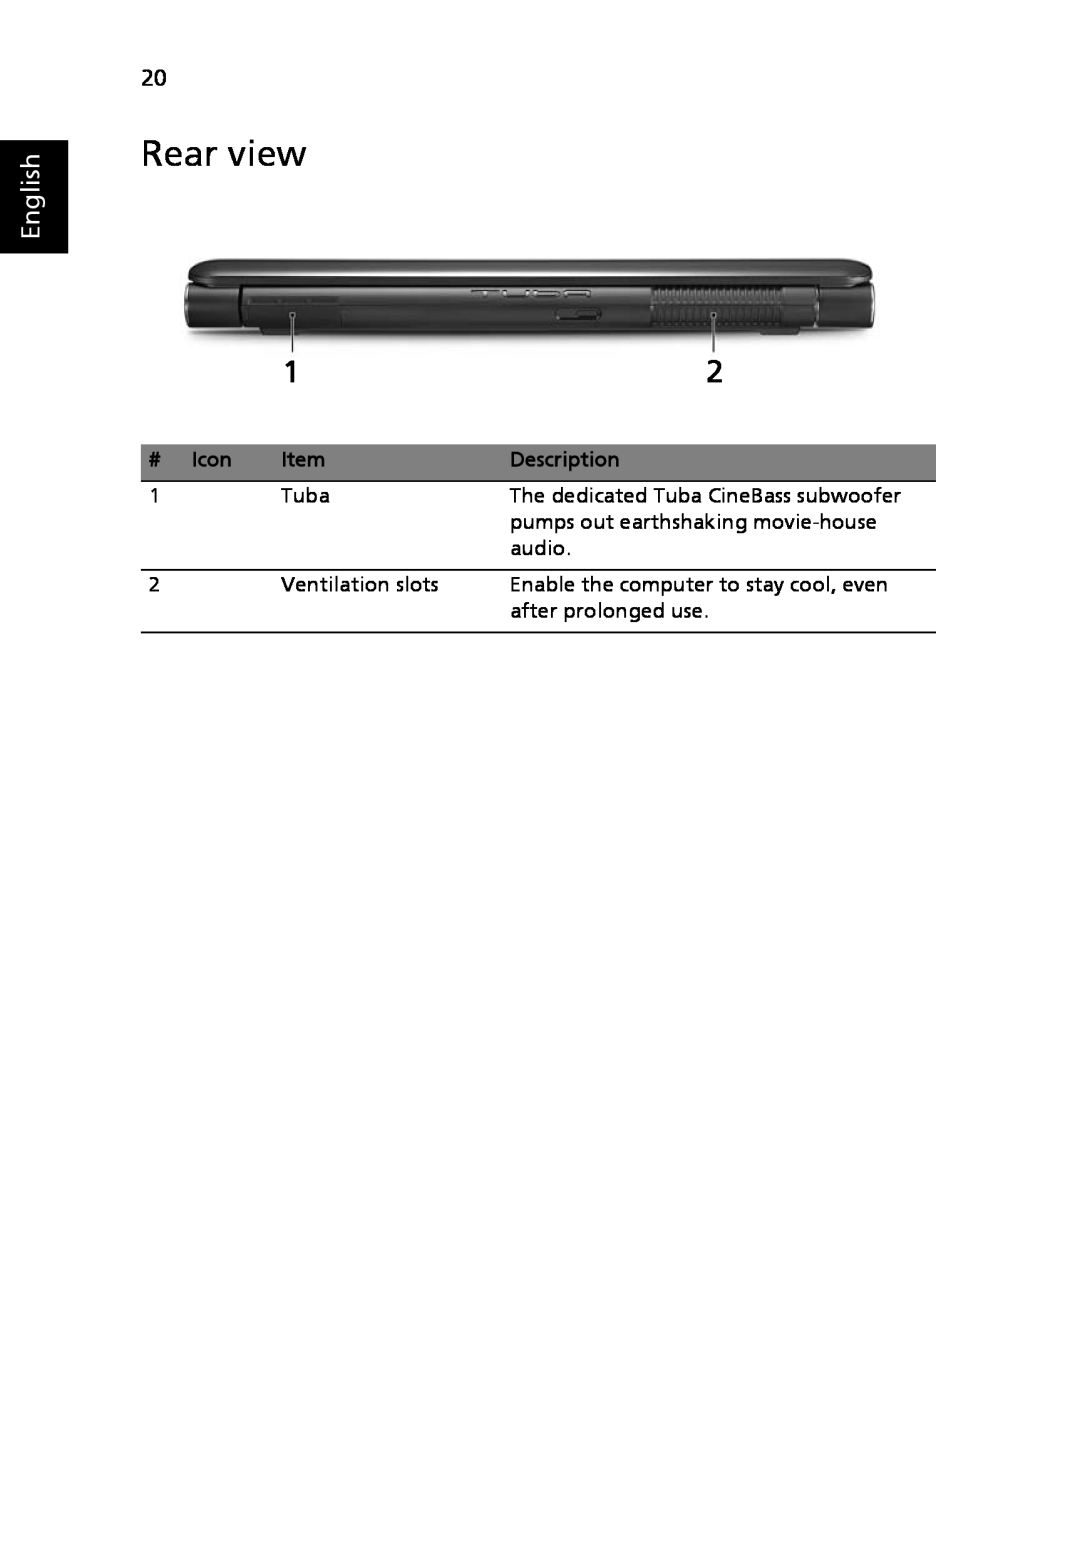 Acer 8920 Series, LE1 manual Rear view, English, # Icon, Description 